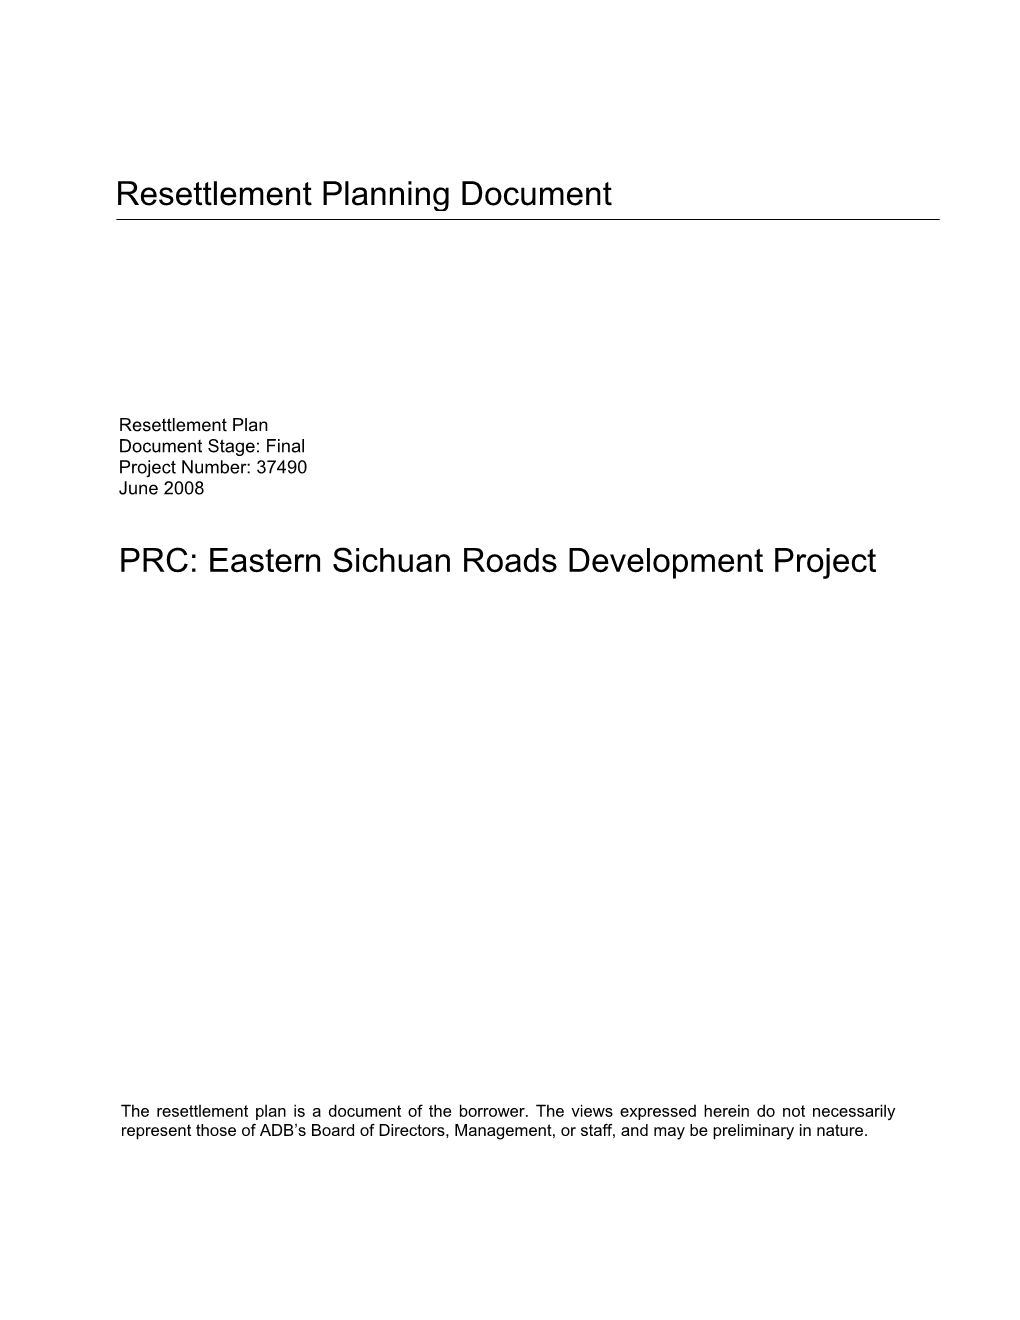 Eastern Sichuan Roads Development Project